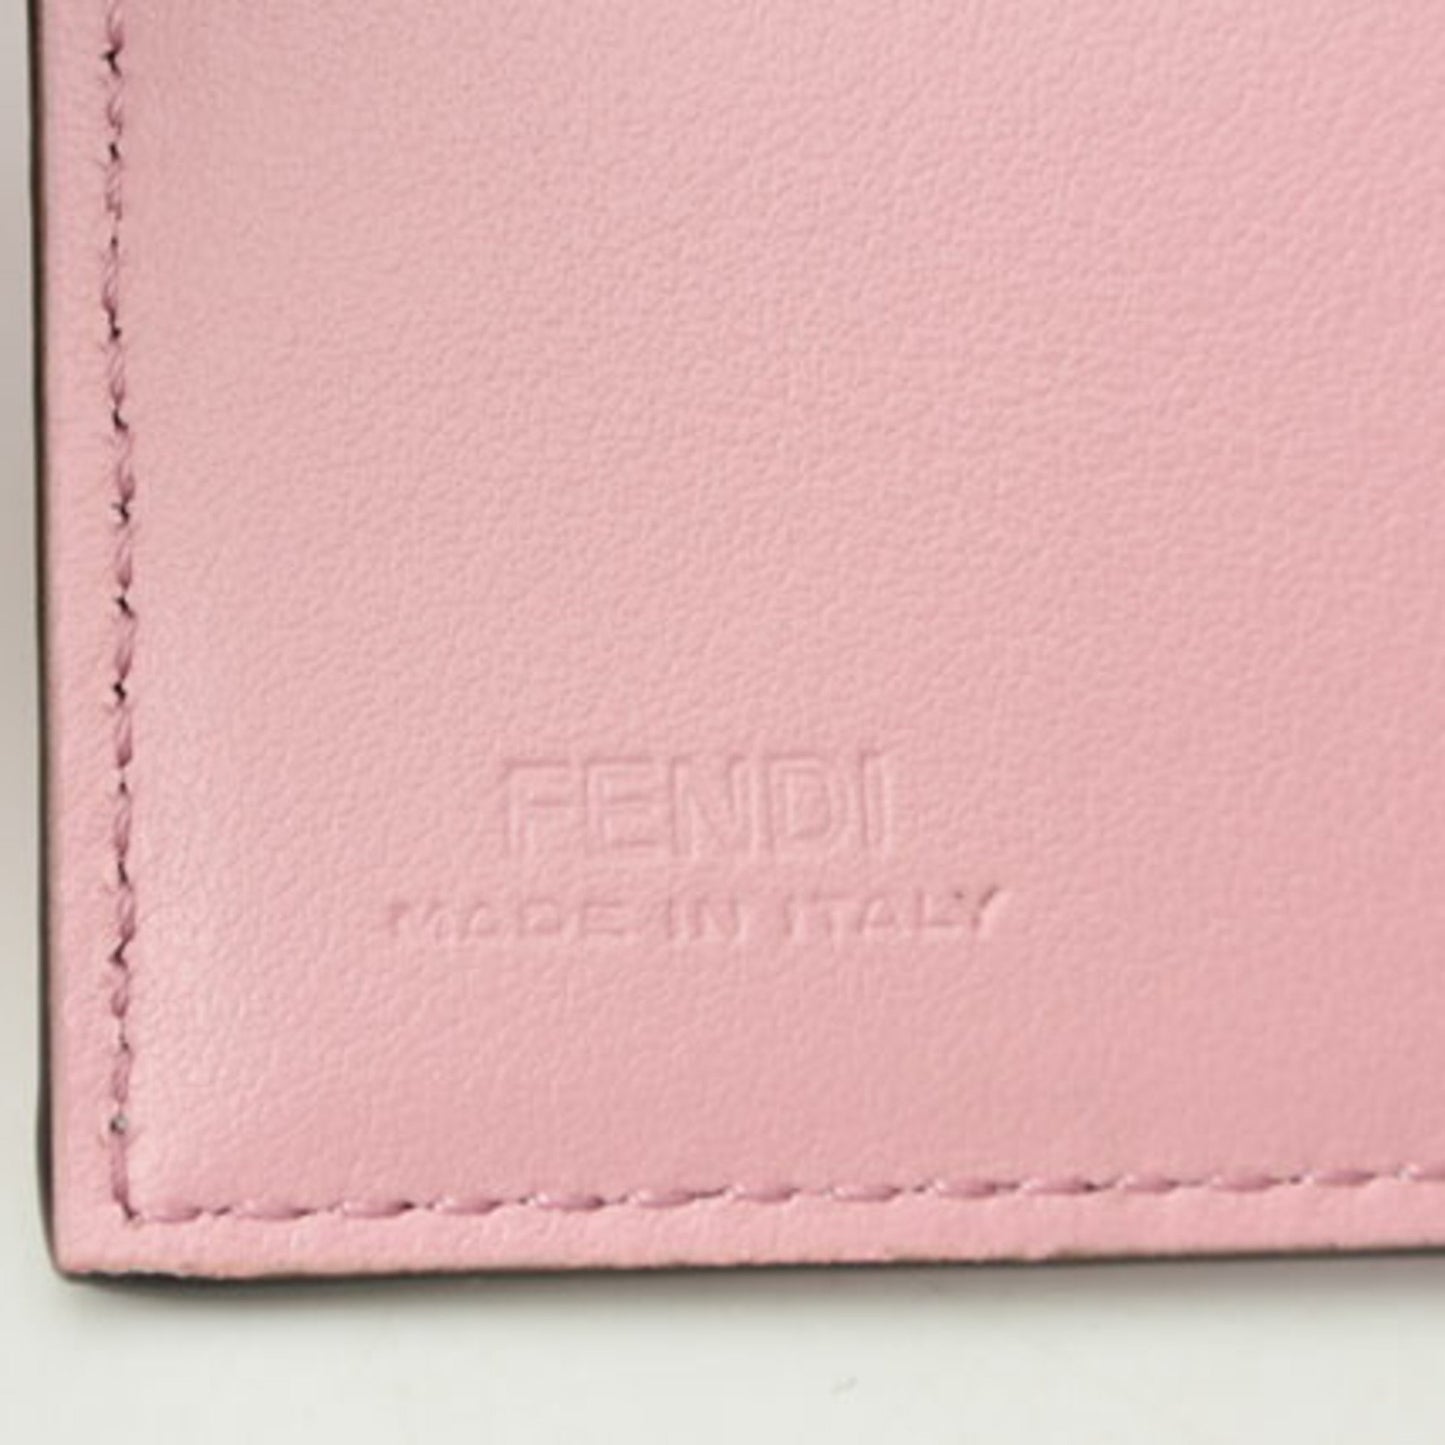 Fendi Women's Stylish Pink Leather Tri-Fold Wallet in Pink